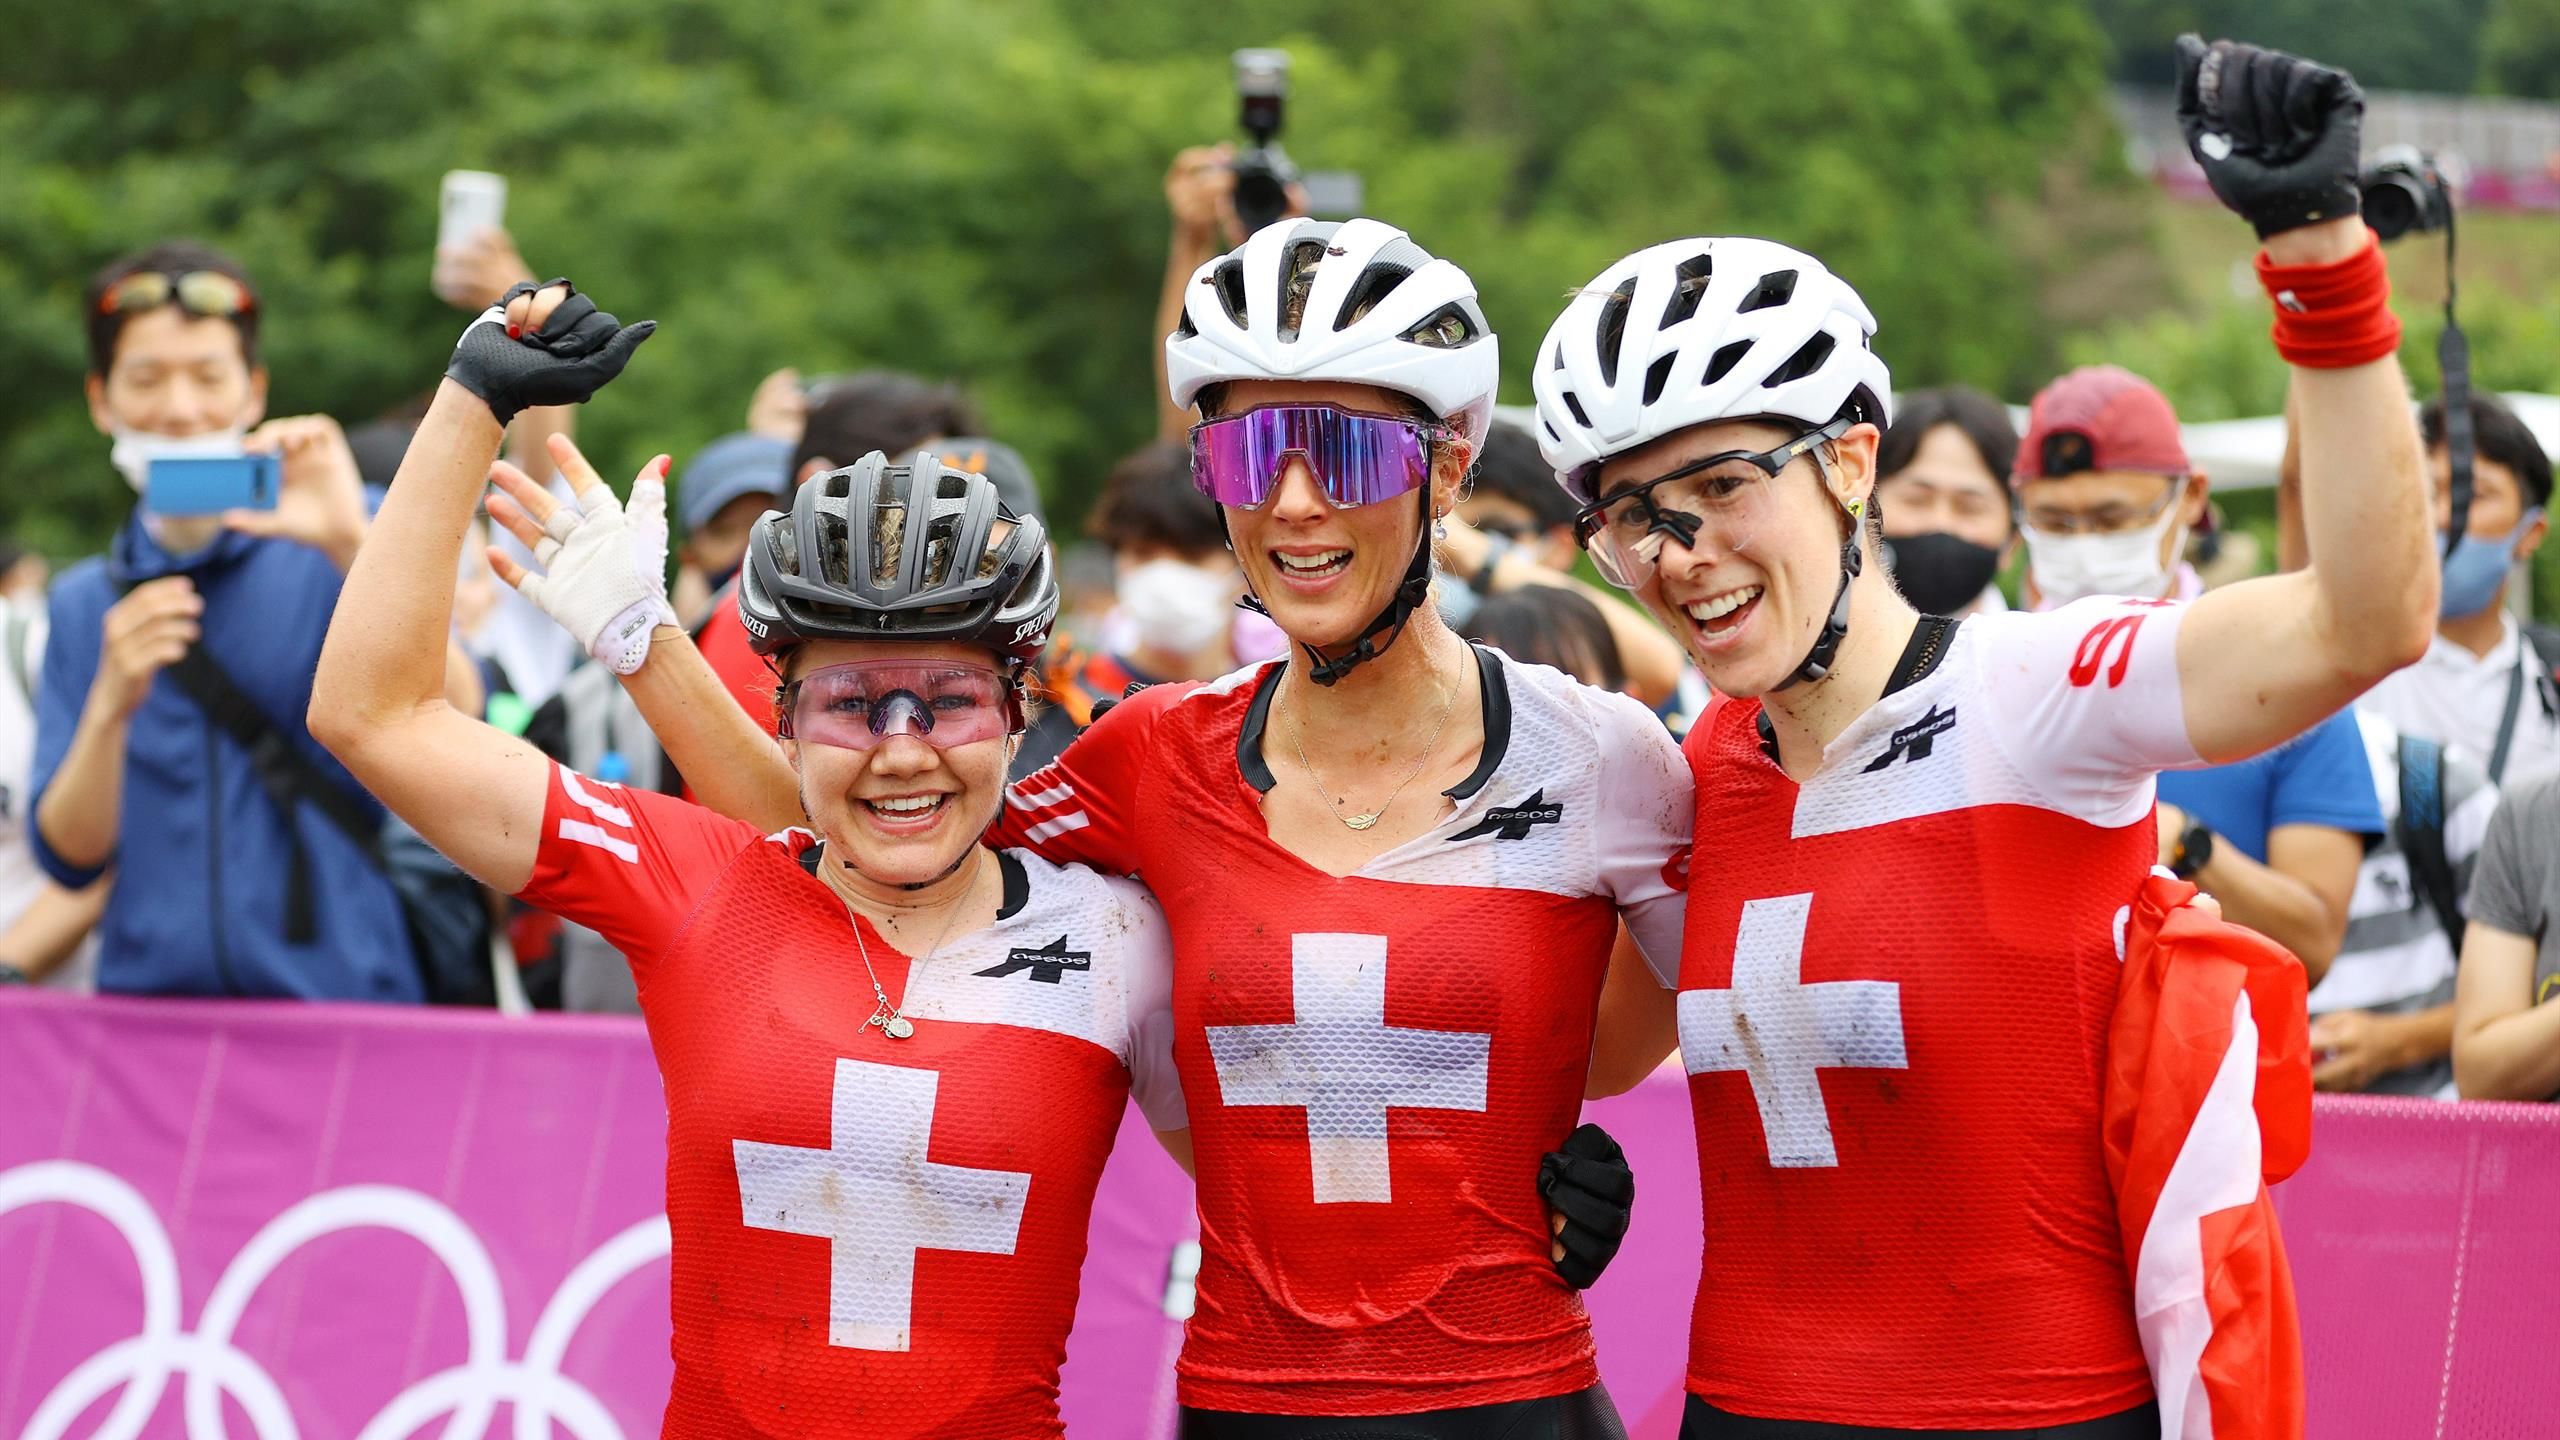 Garderobe pols mesh Tokyo 2020 - Switzerland sweep the mountain bike podium in treacherous  conditions - Eurosport